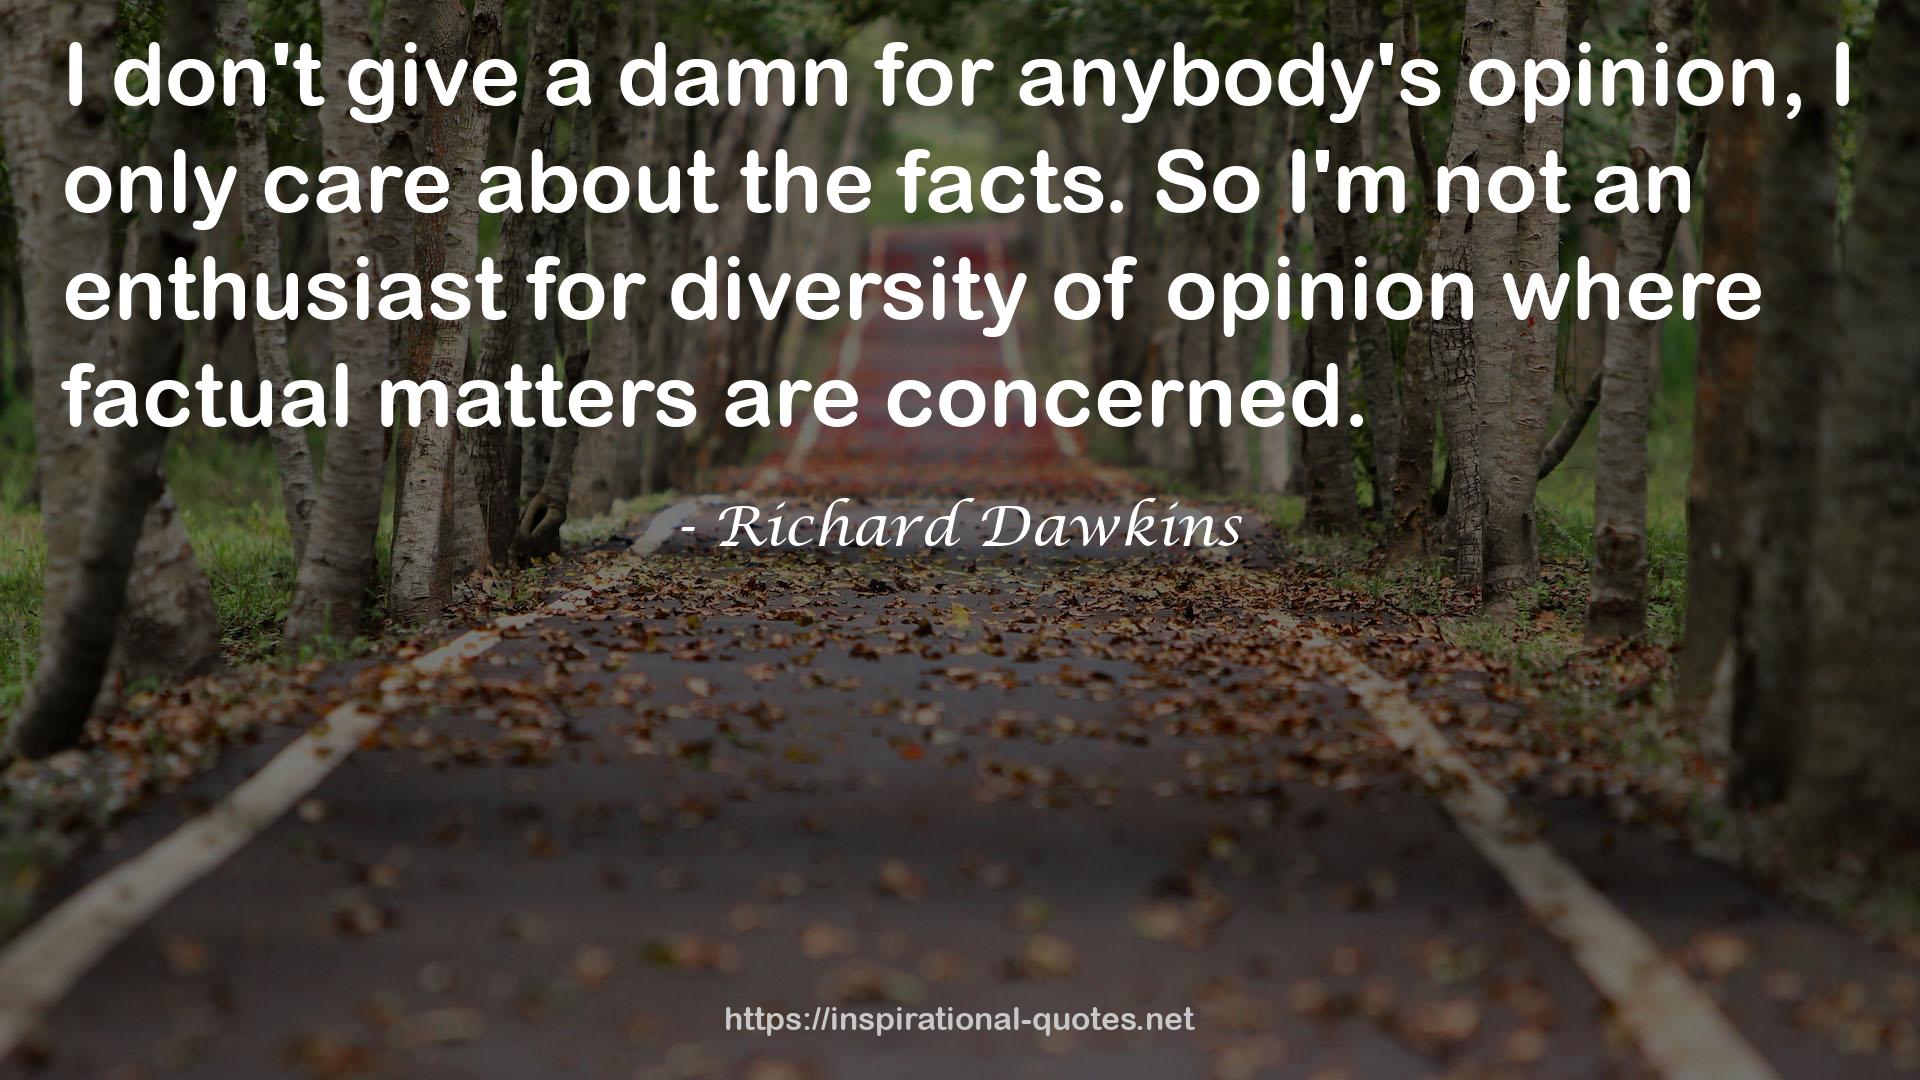 Richard Dawkins QUOTES